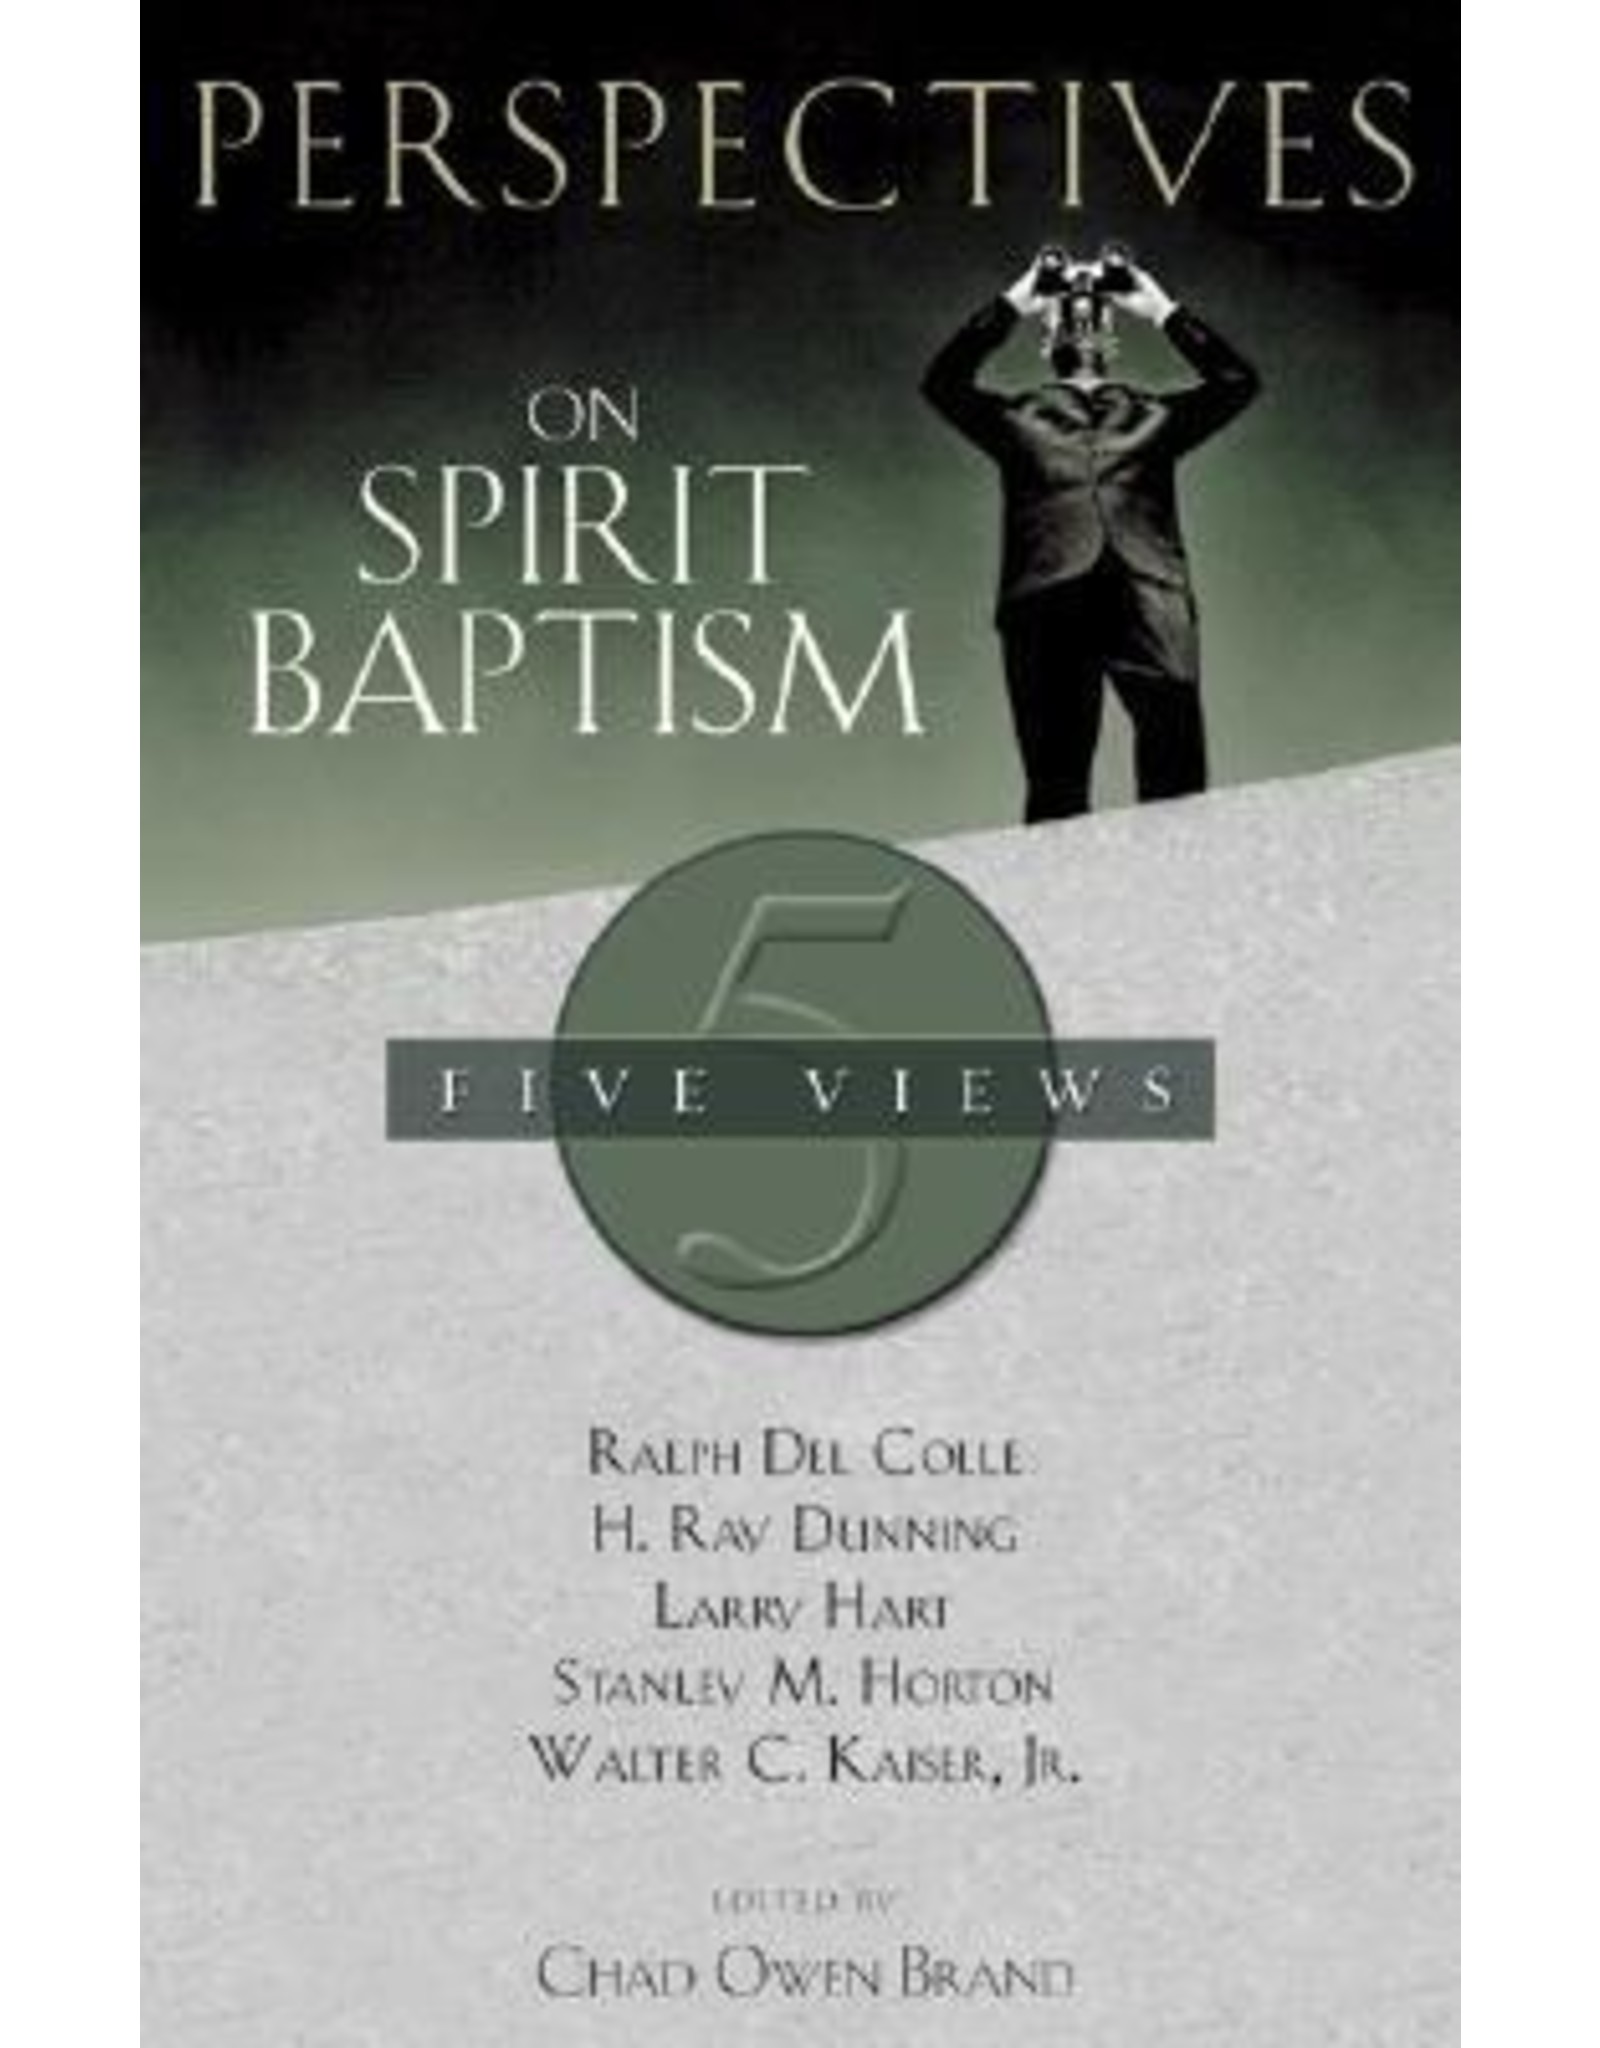 Larry Hart, Stanley Horton, Walter C. Kaiser, Jr, Ralph Del Colle & H. Ray Dunning Perspectives on Spirit Baptism